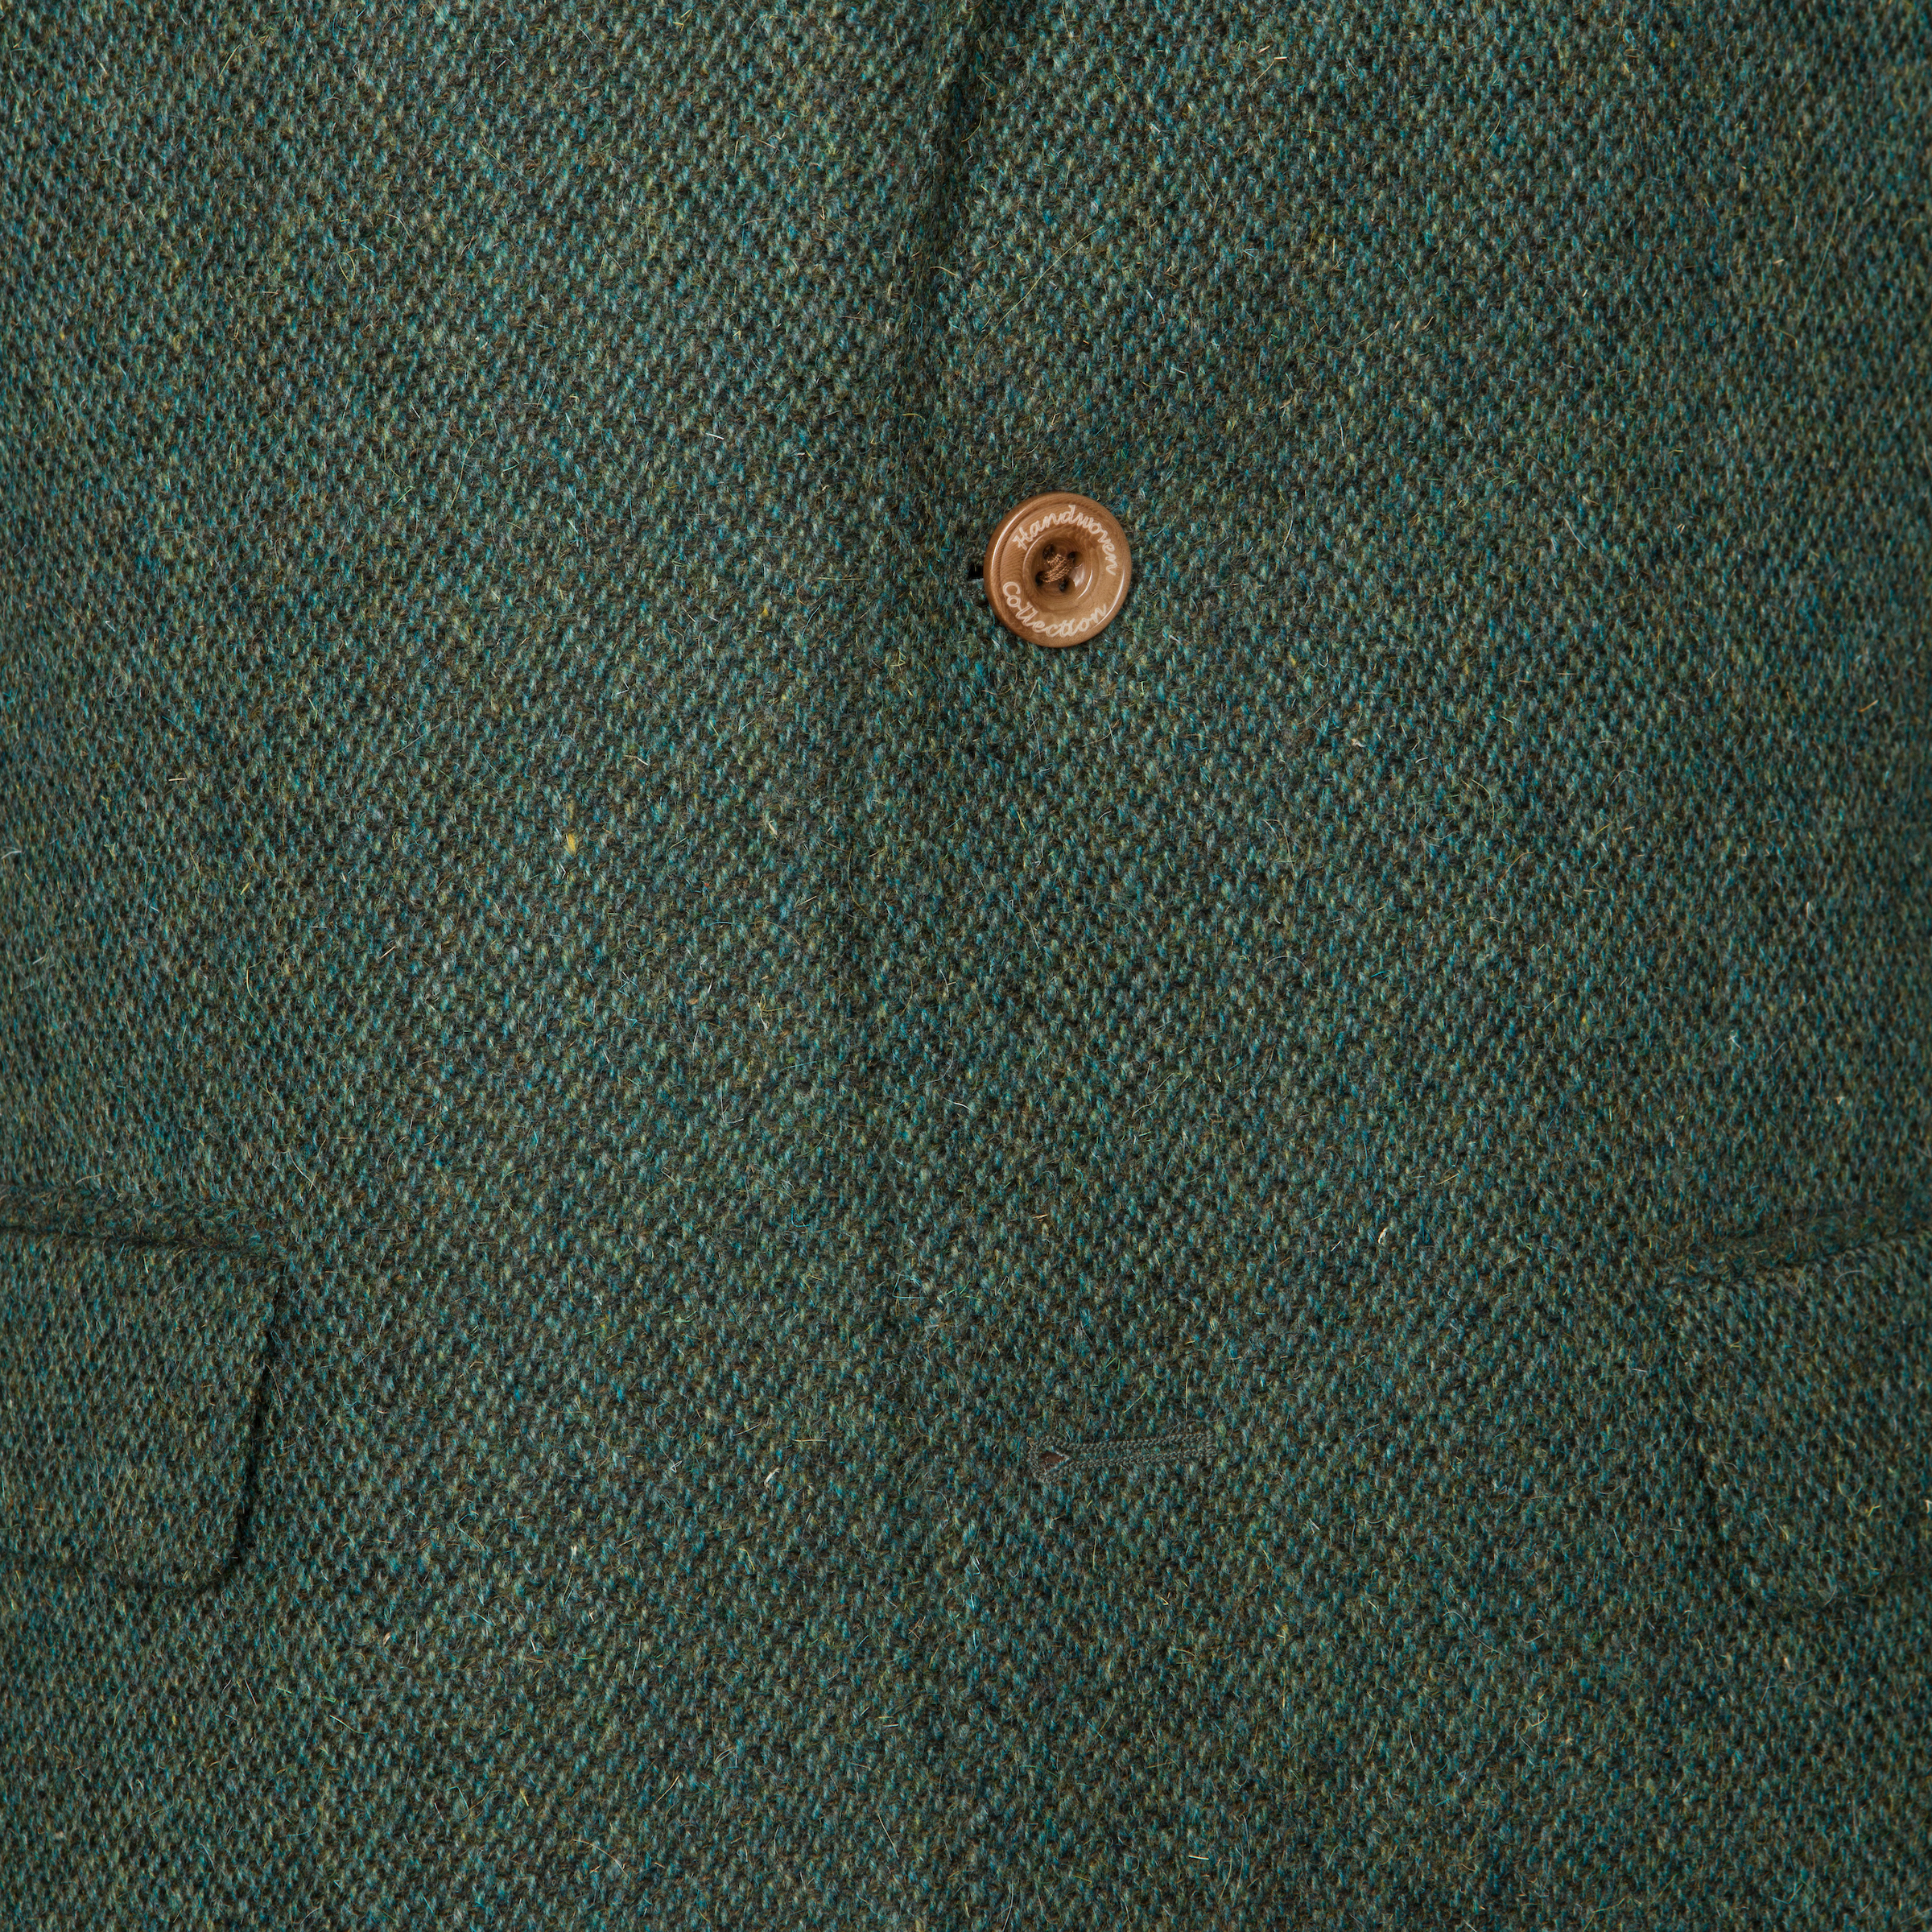  Handwoven Donegal Knocknarea Tweed Jacket